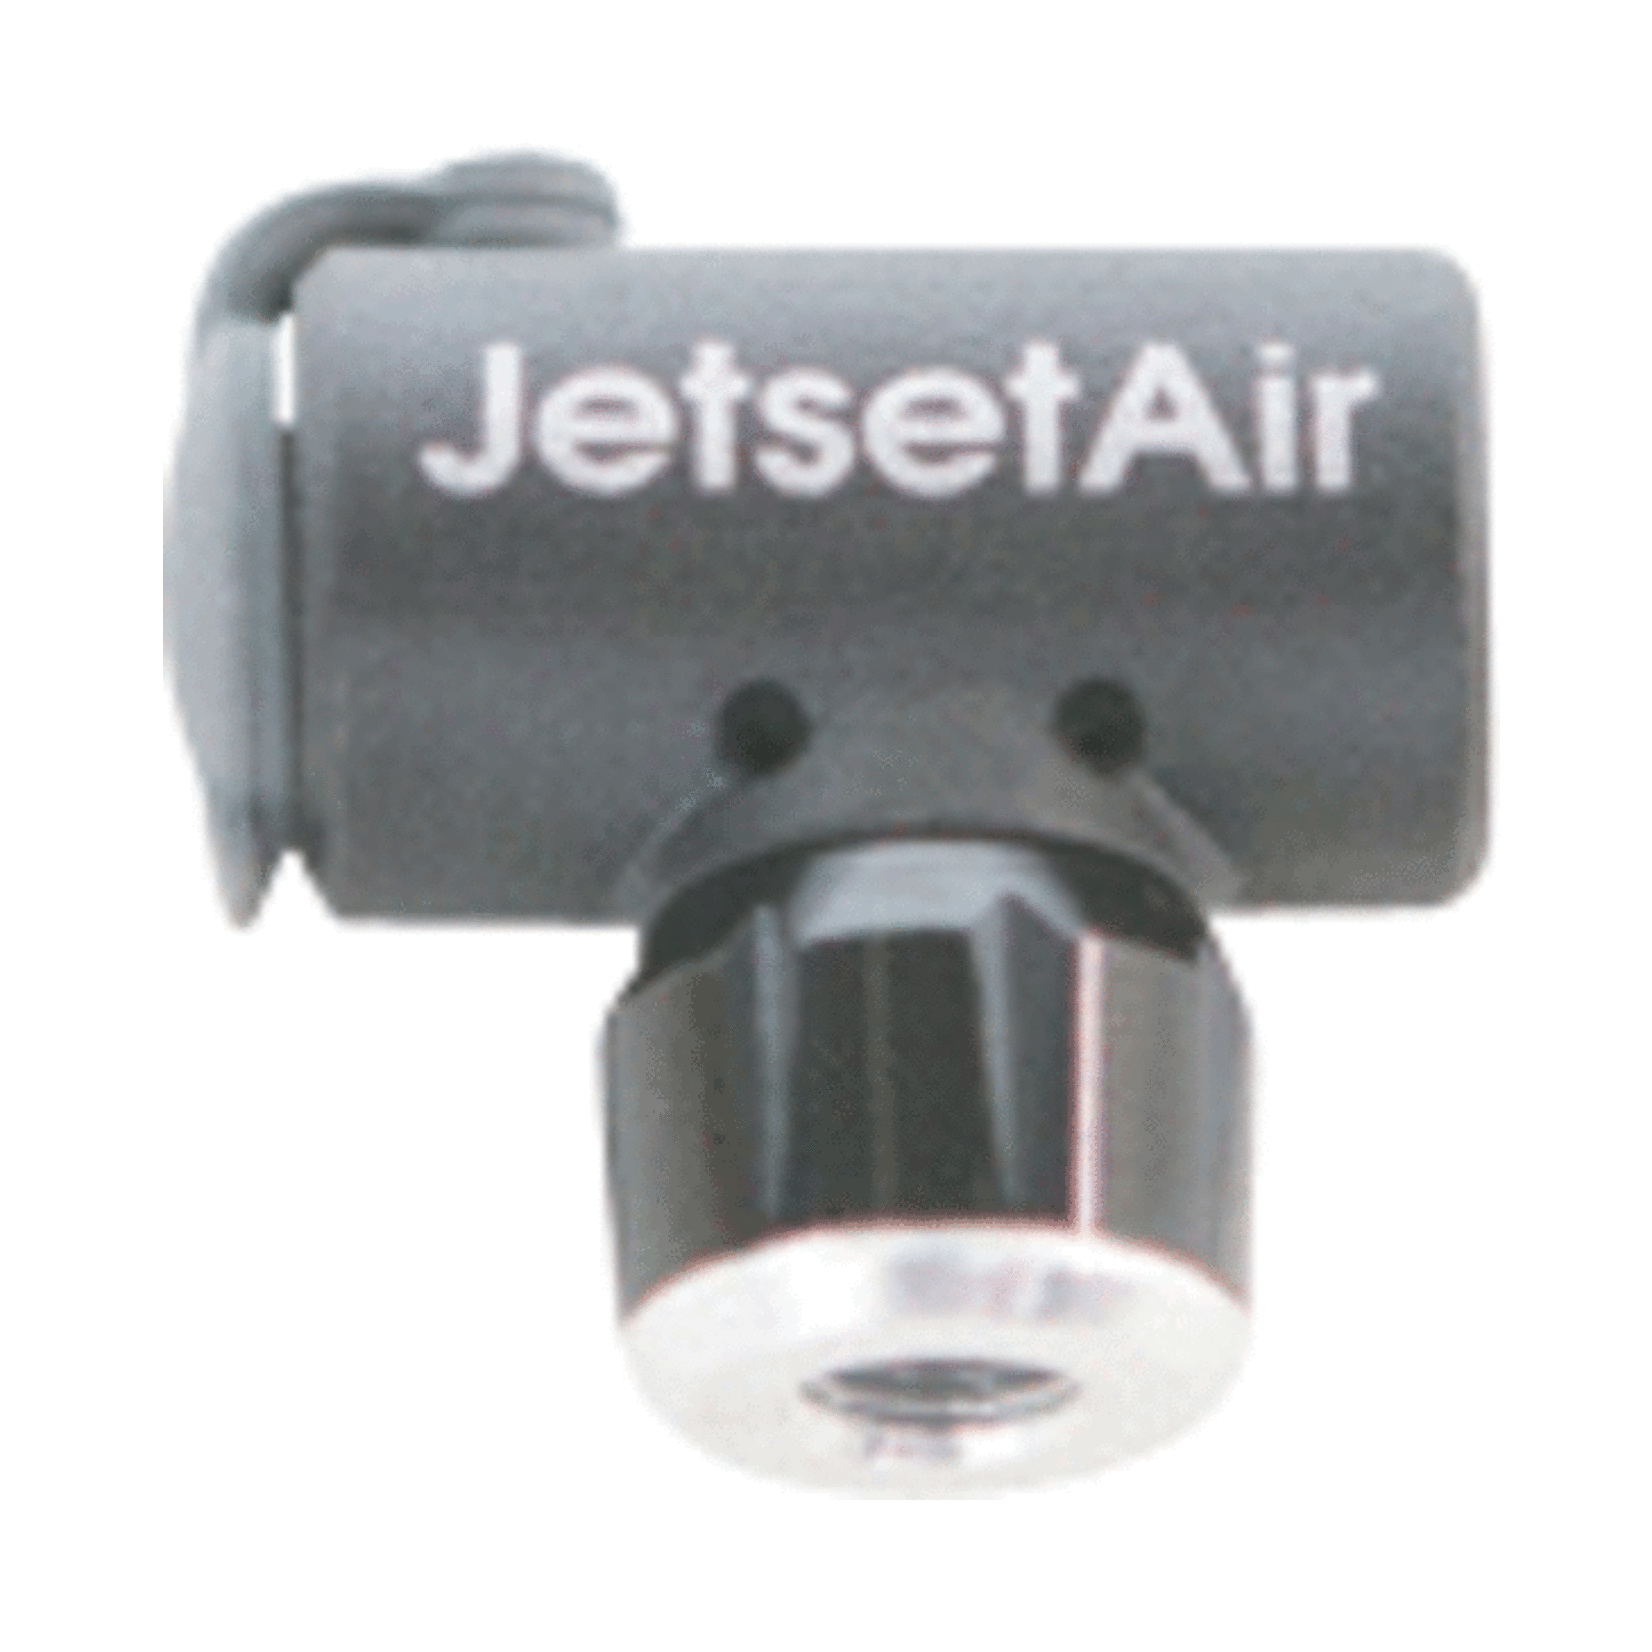 49N 49N Adaptateur pour gonfler CO2 Jetsetair